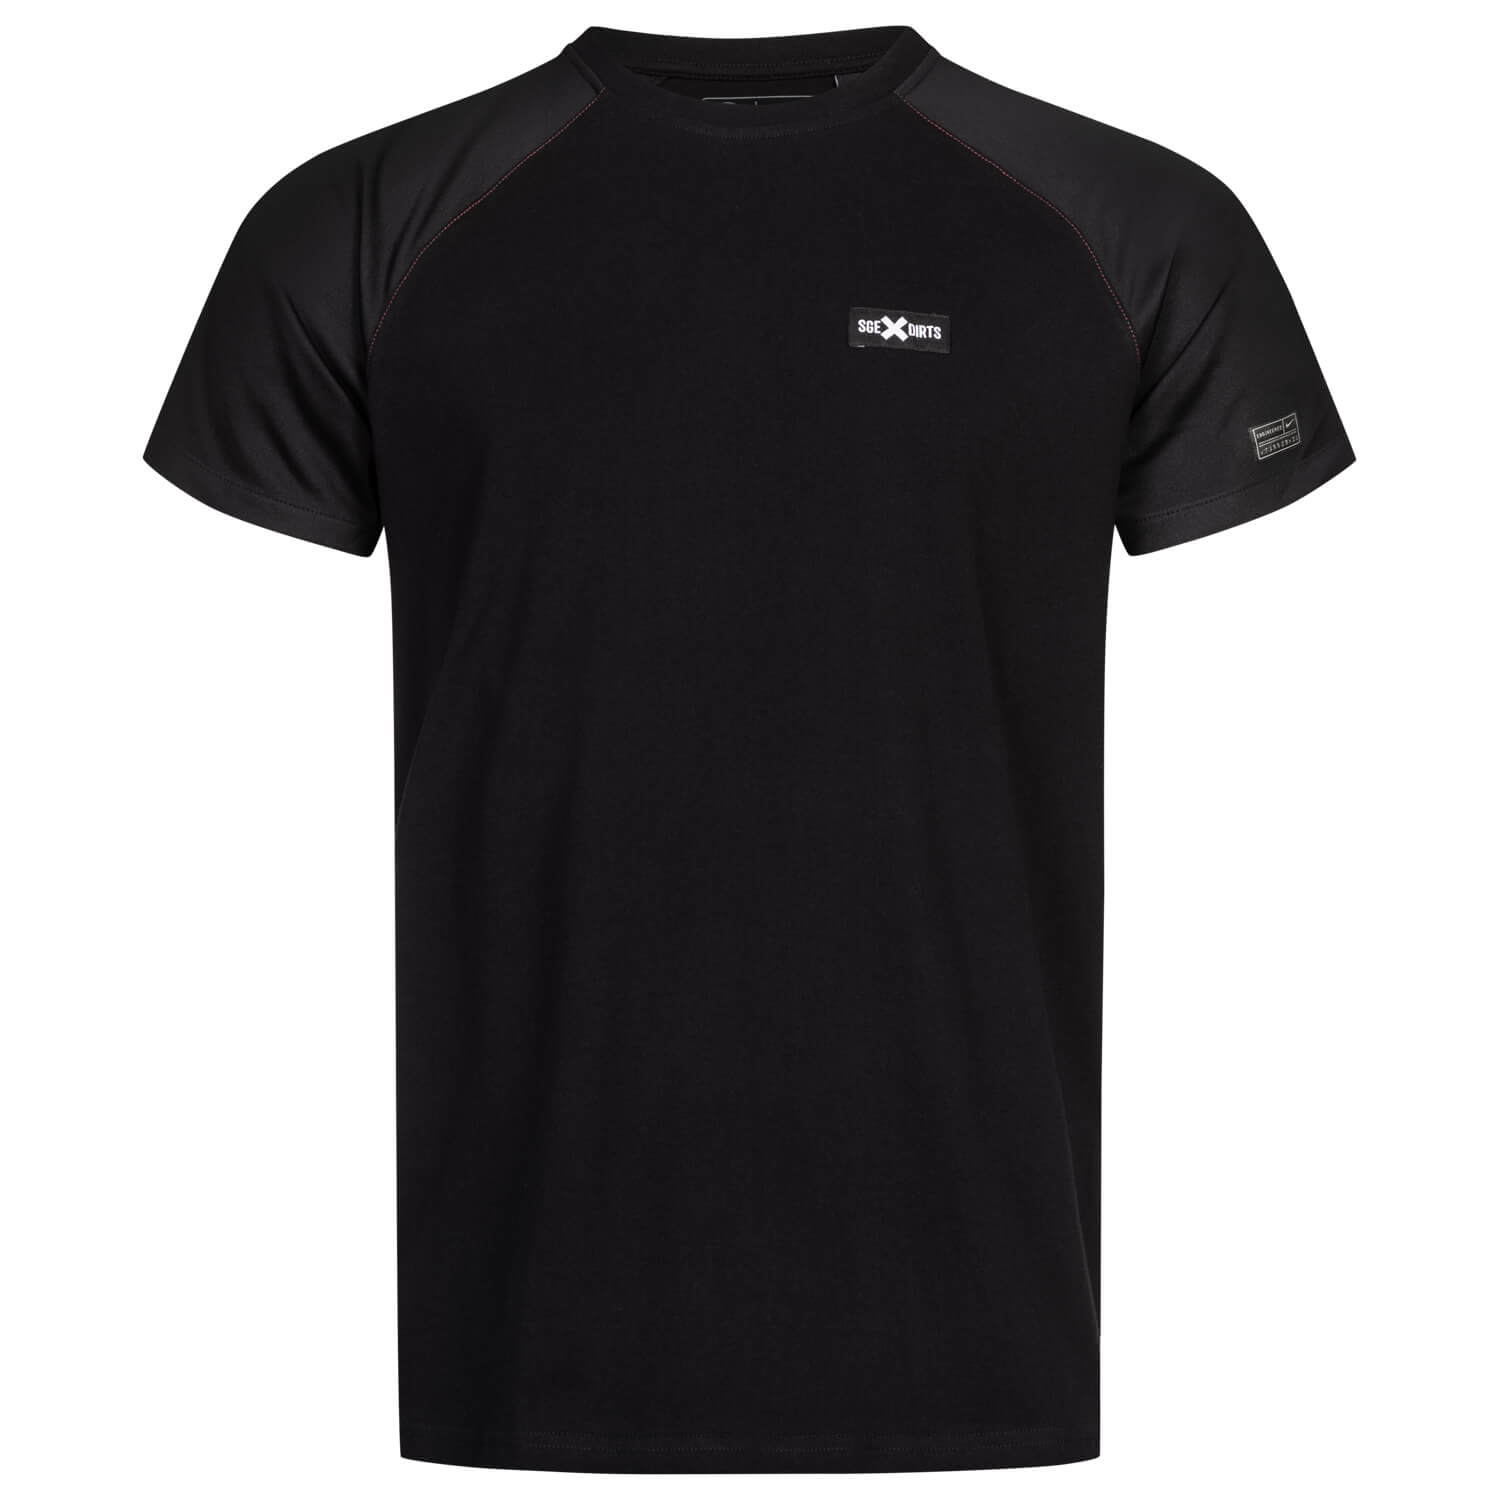 Bild 1: T-Shirt Upcycling Black